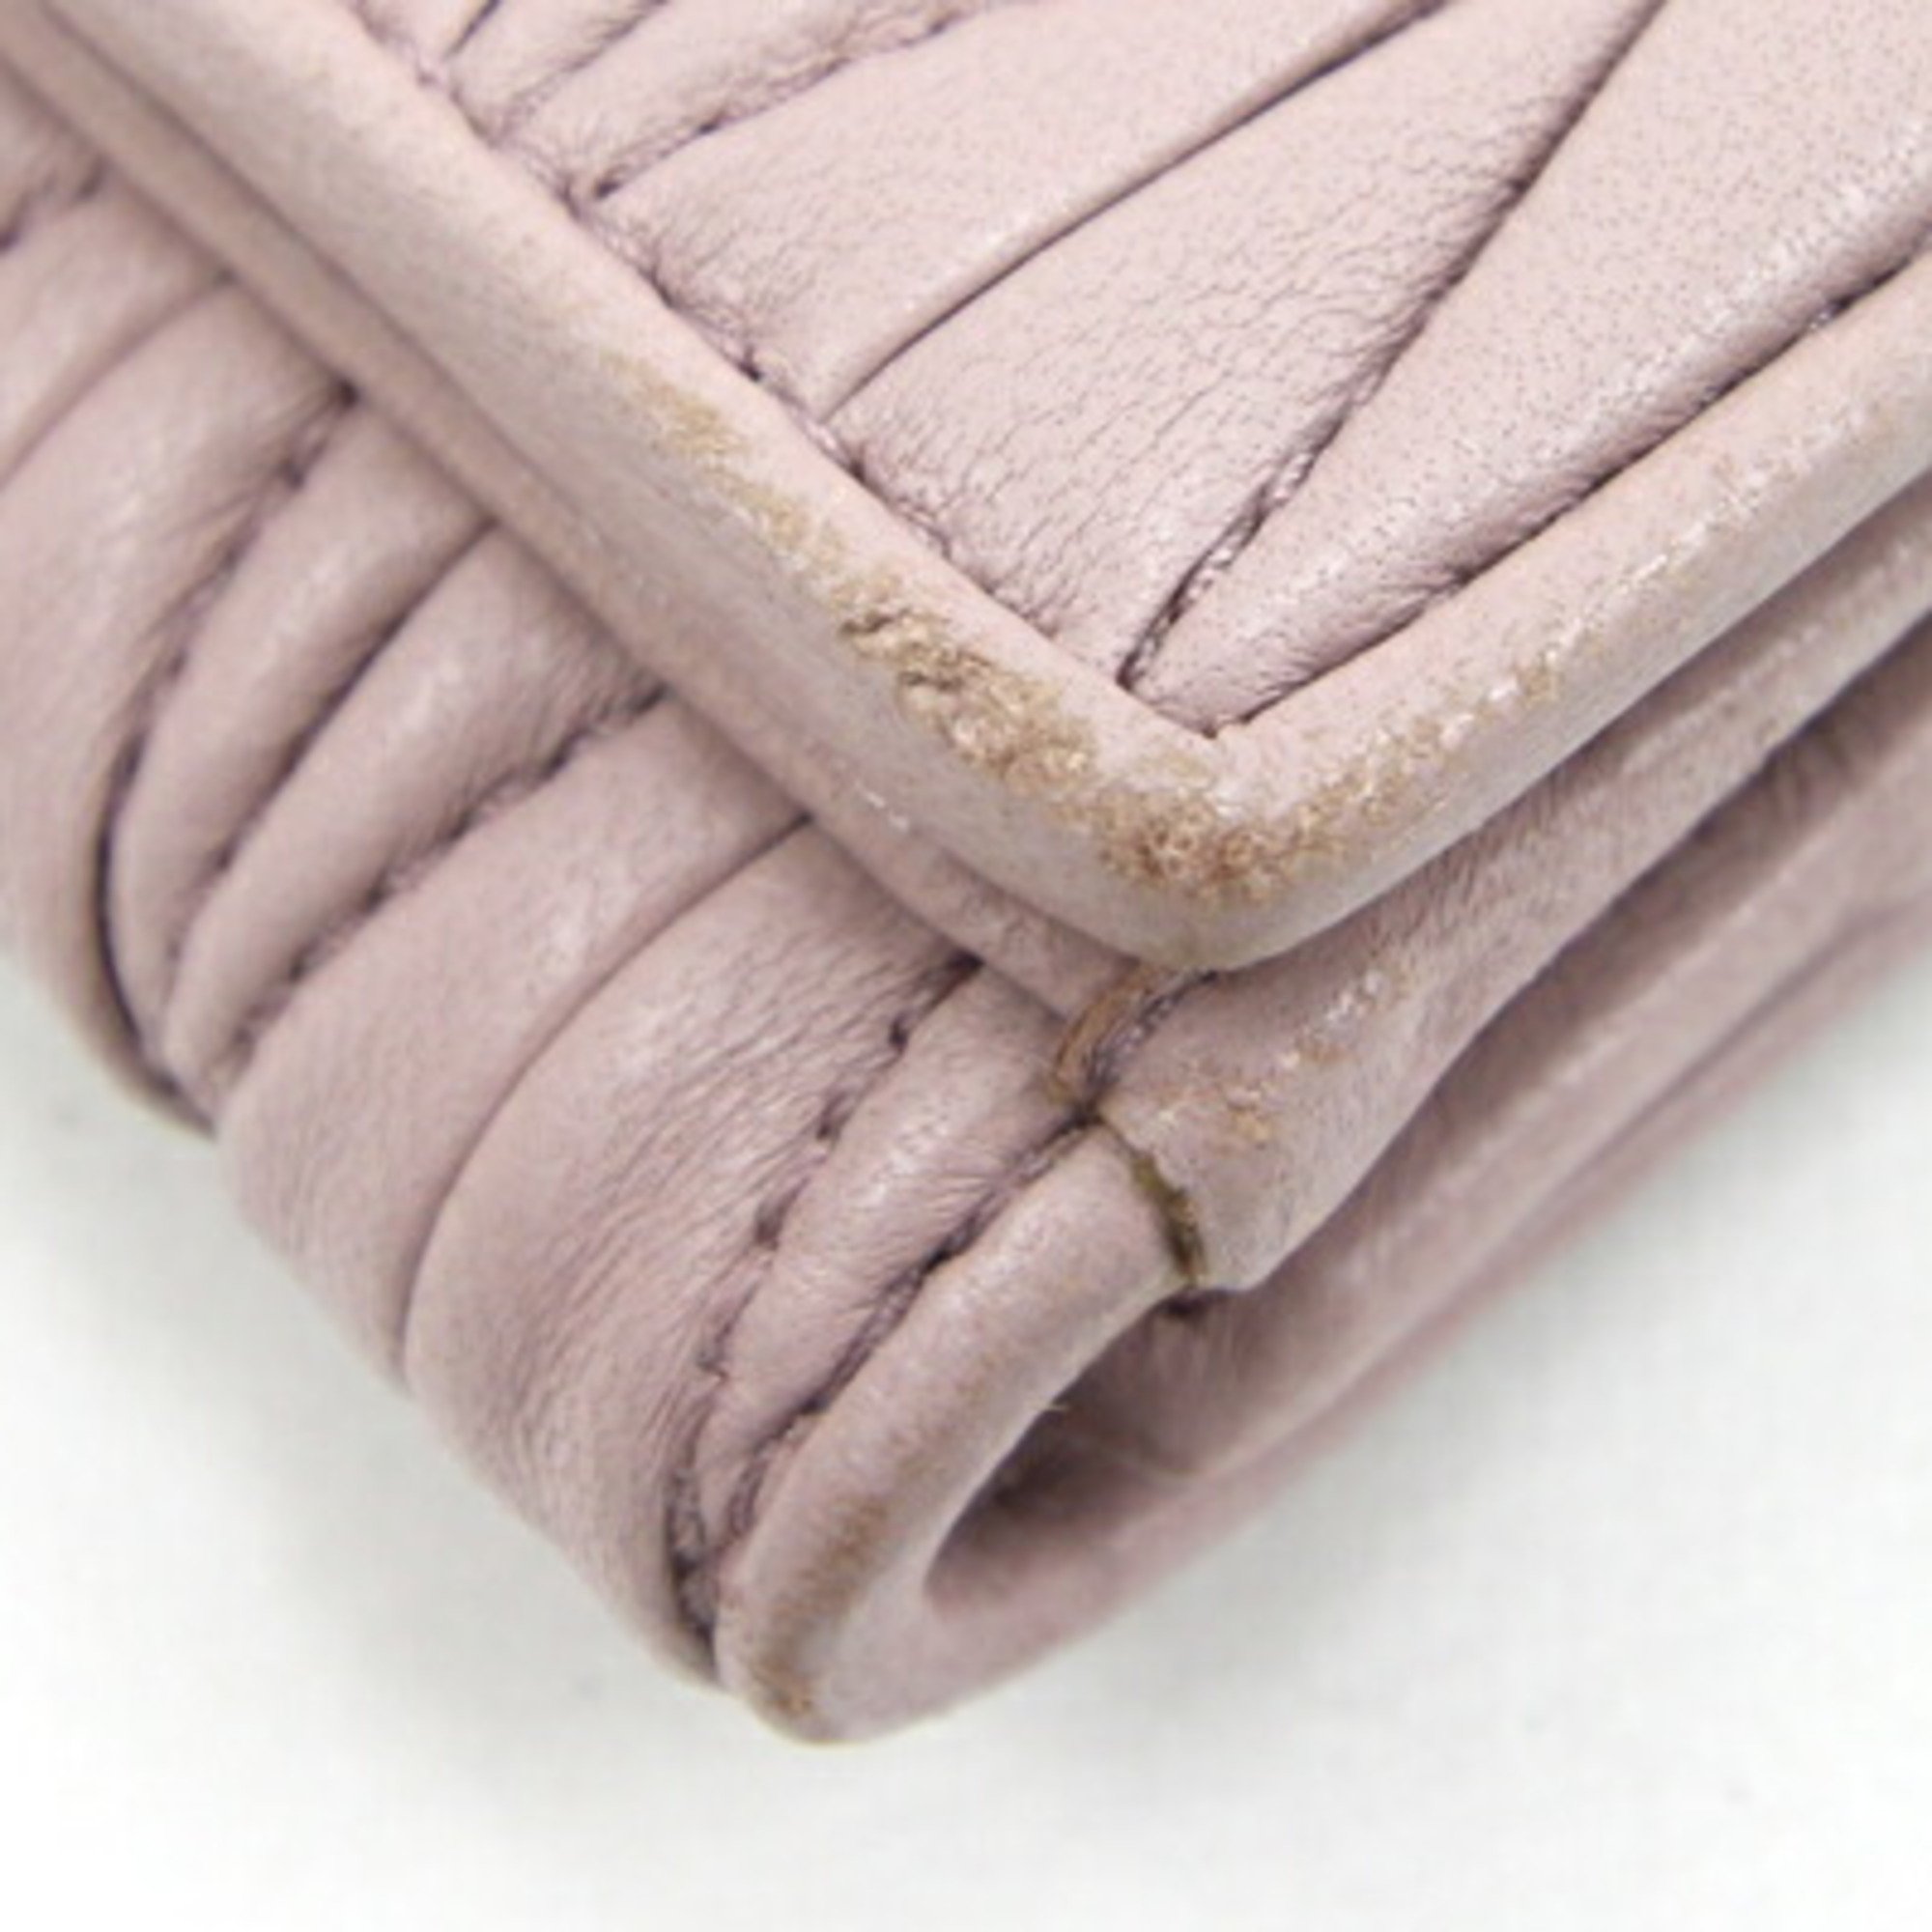 Miu Miu Miu W Wallet Matelasse 5MH523 Light Pink Leather Compact Gathered Double Sided Opening Bi-fold Women's Pleated Shirring MIUMIU